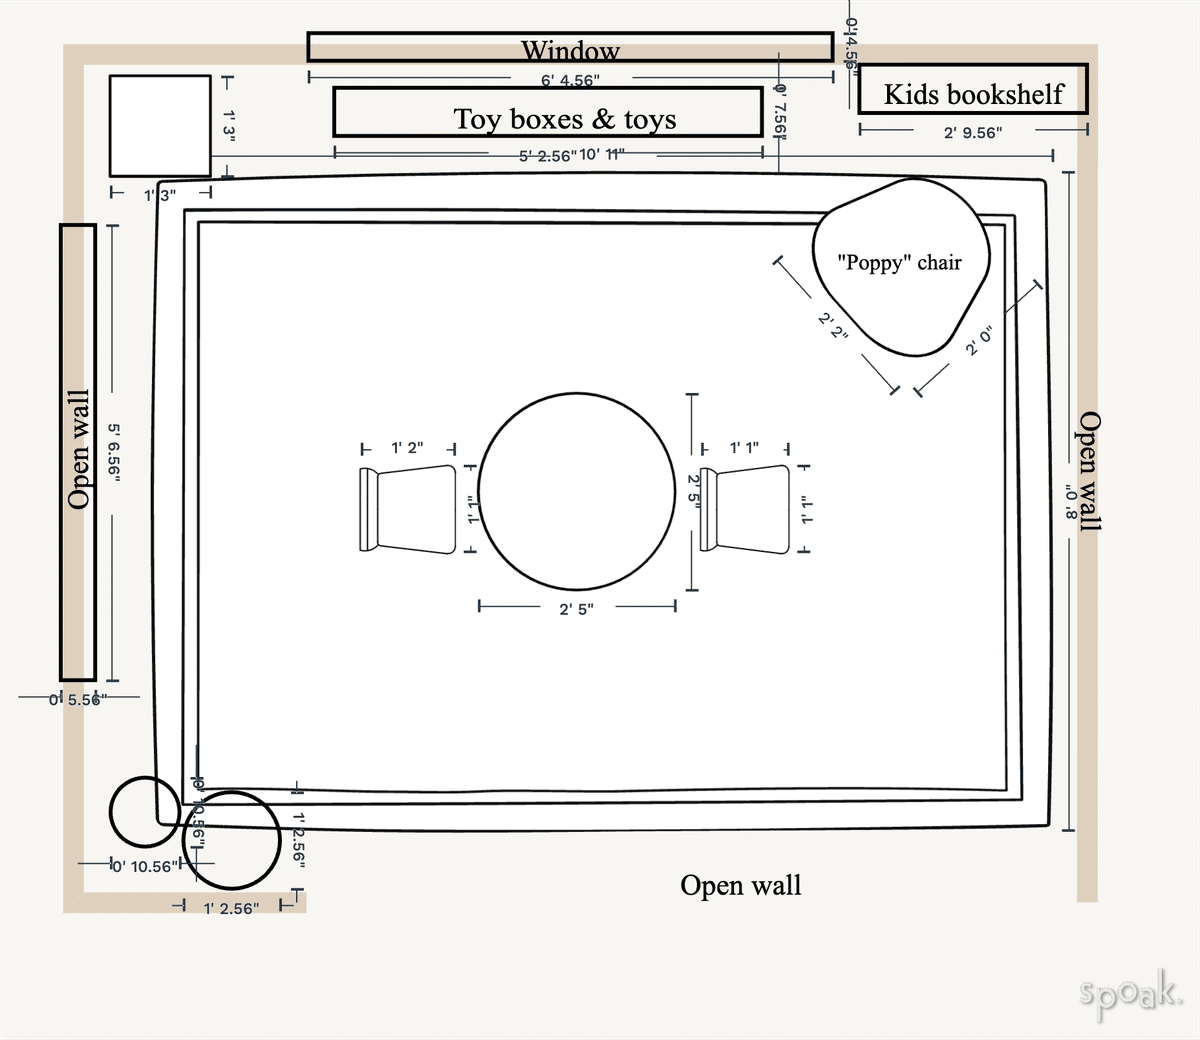 Game Room Floor Plan designed by Gabby Orr